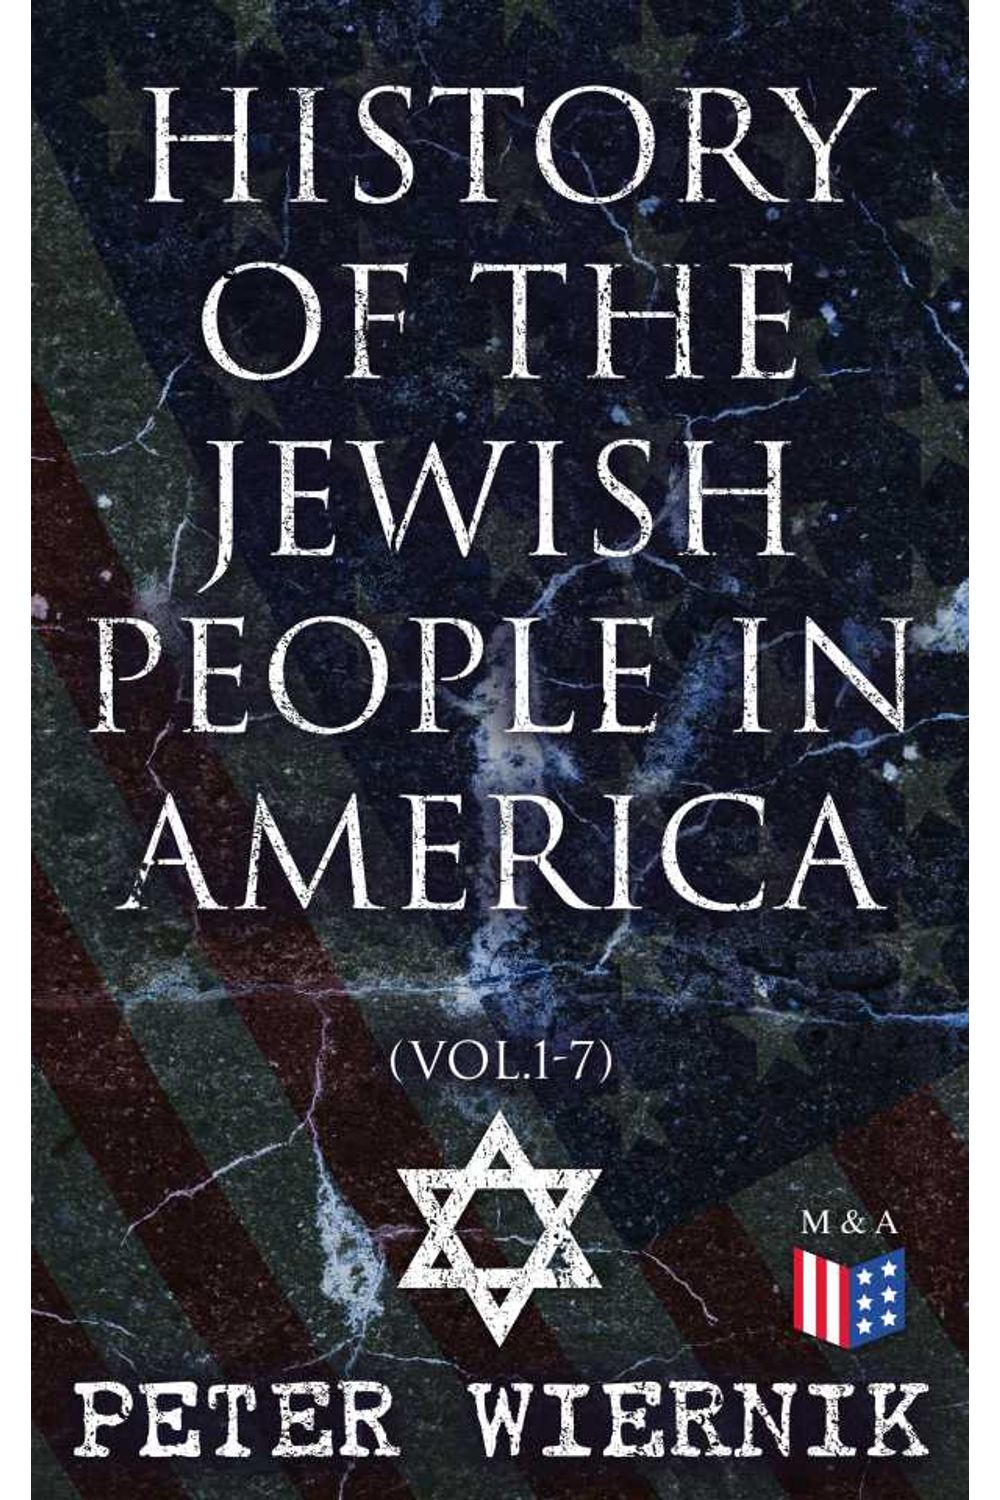 bw-history-of-the-jewish-people-in-america-vol17-madison-adams-press-4064066383244